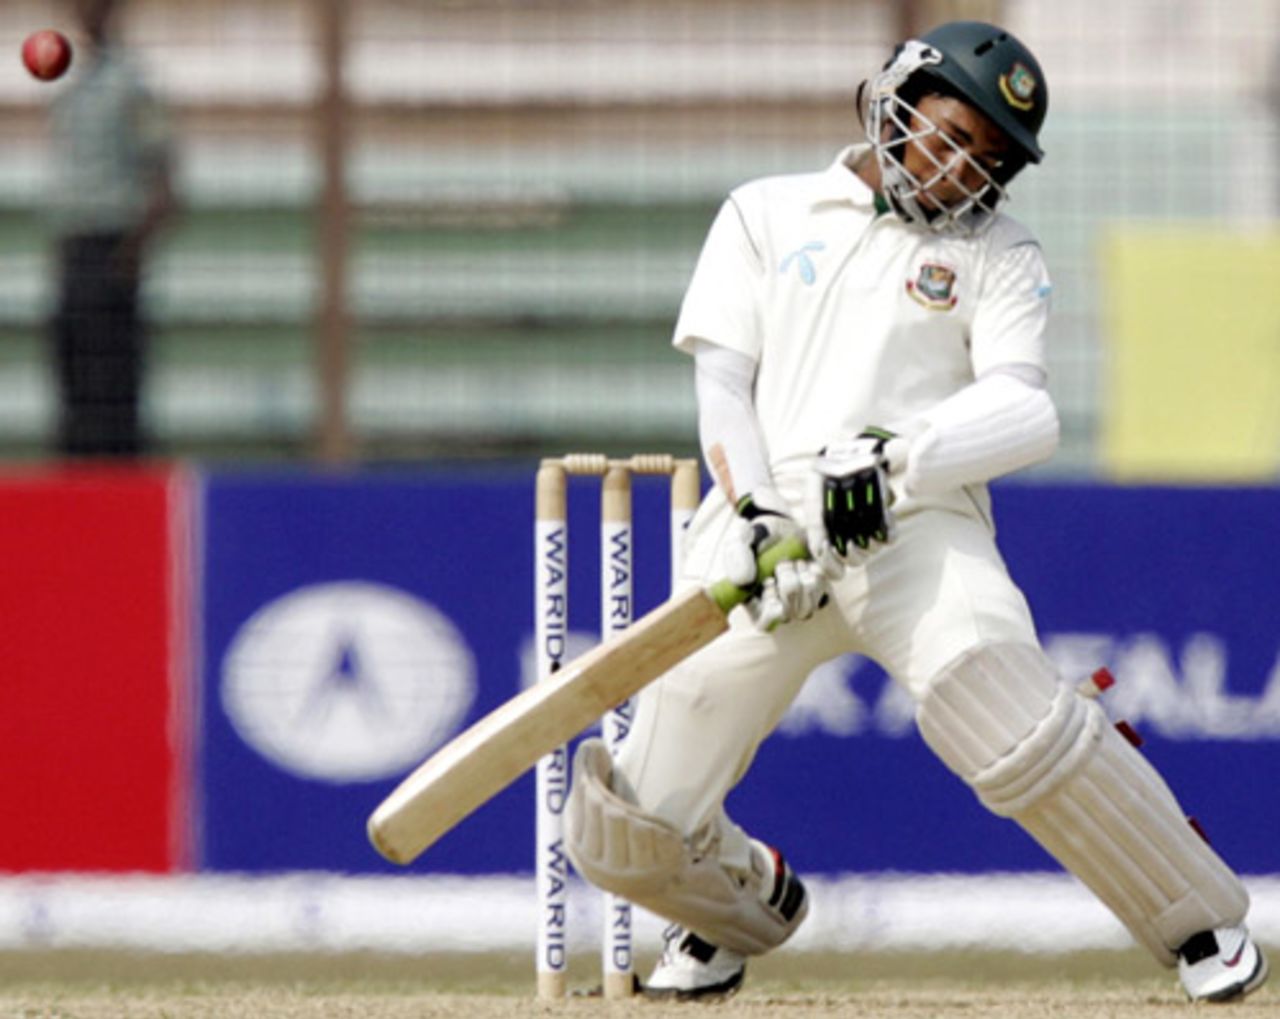 Mushfiqur Rahim takes evasive action, Bangladesh v South Africa, 2nd Test, Chittagong, 3rd day, March 2, 2008 